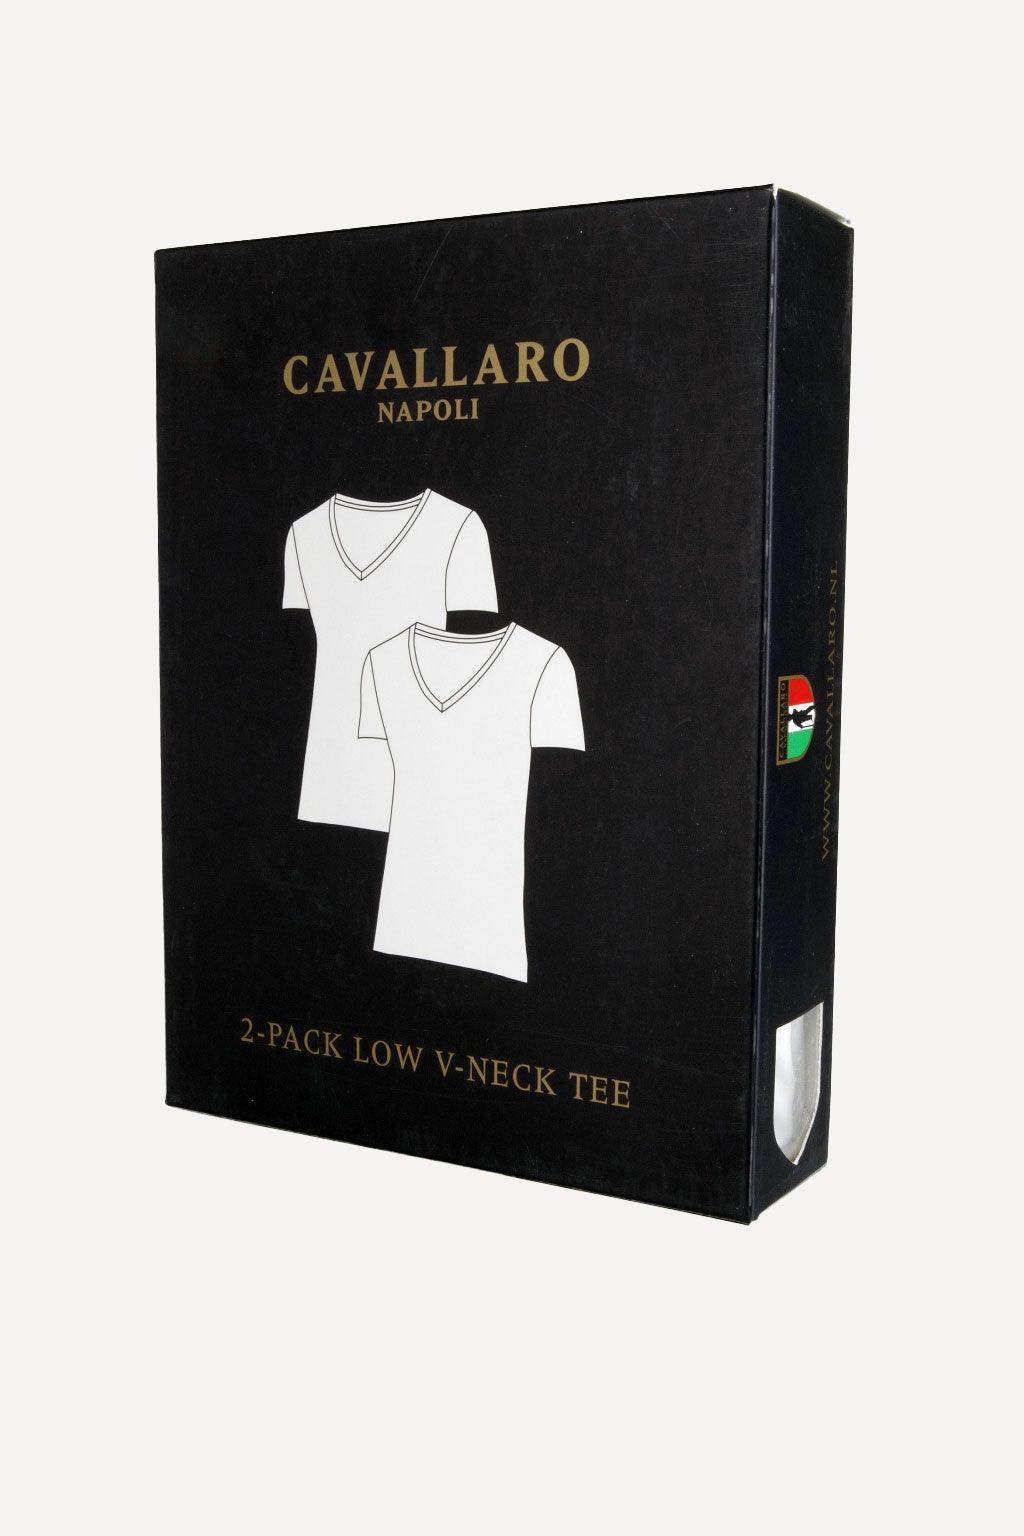 Cavallaro t-shirt | Big Boss | the menswear concept